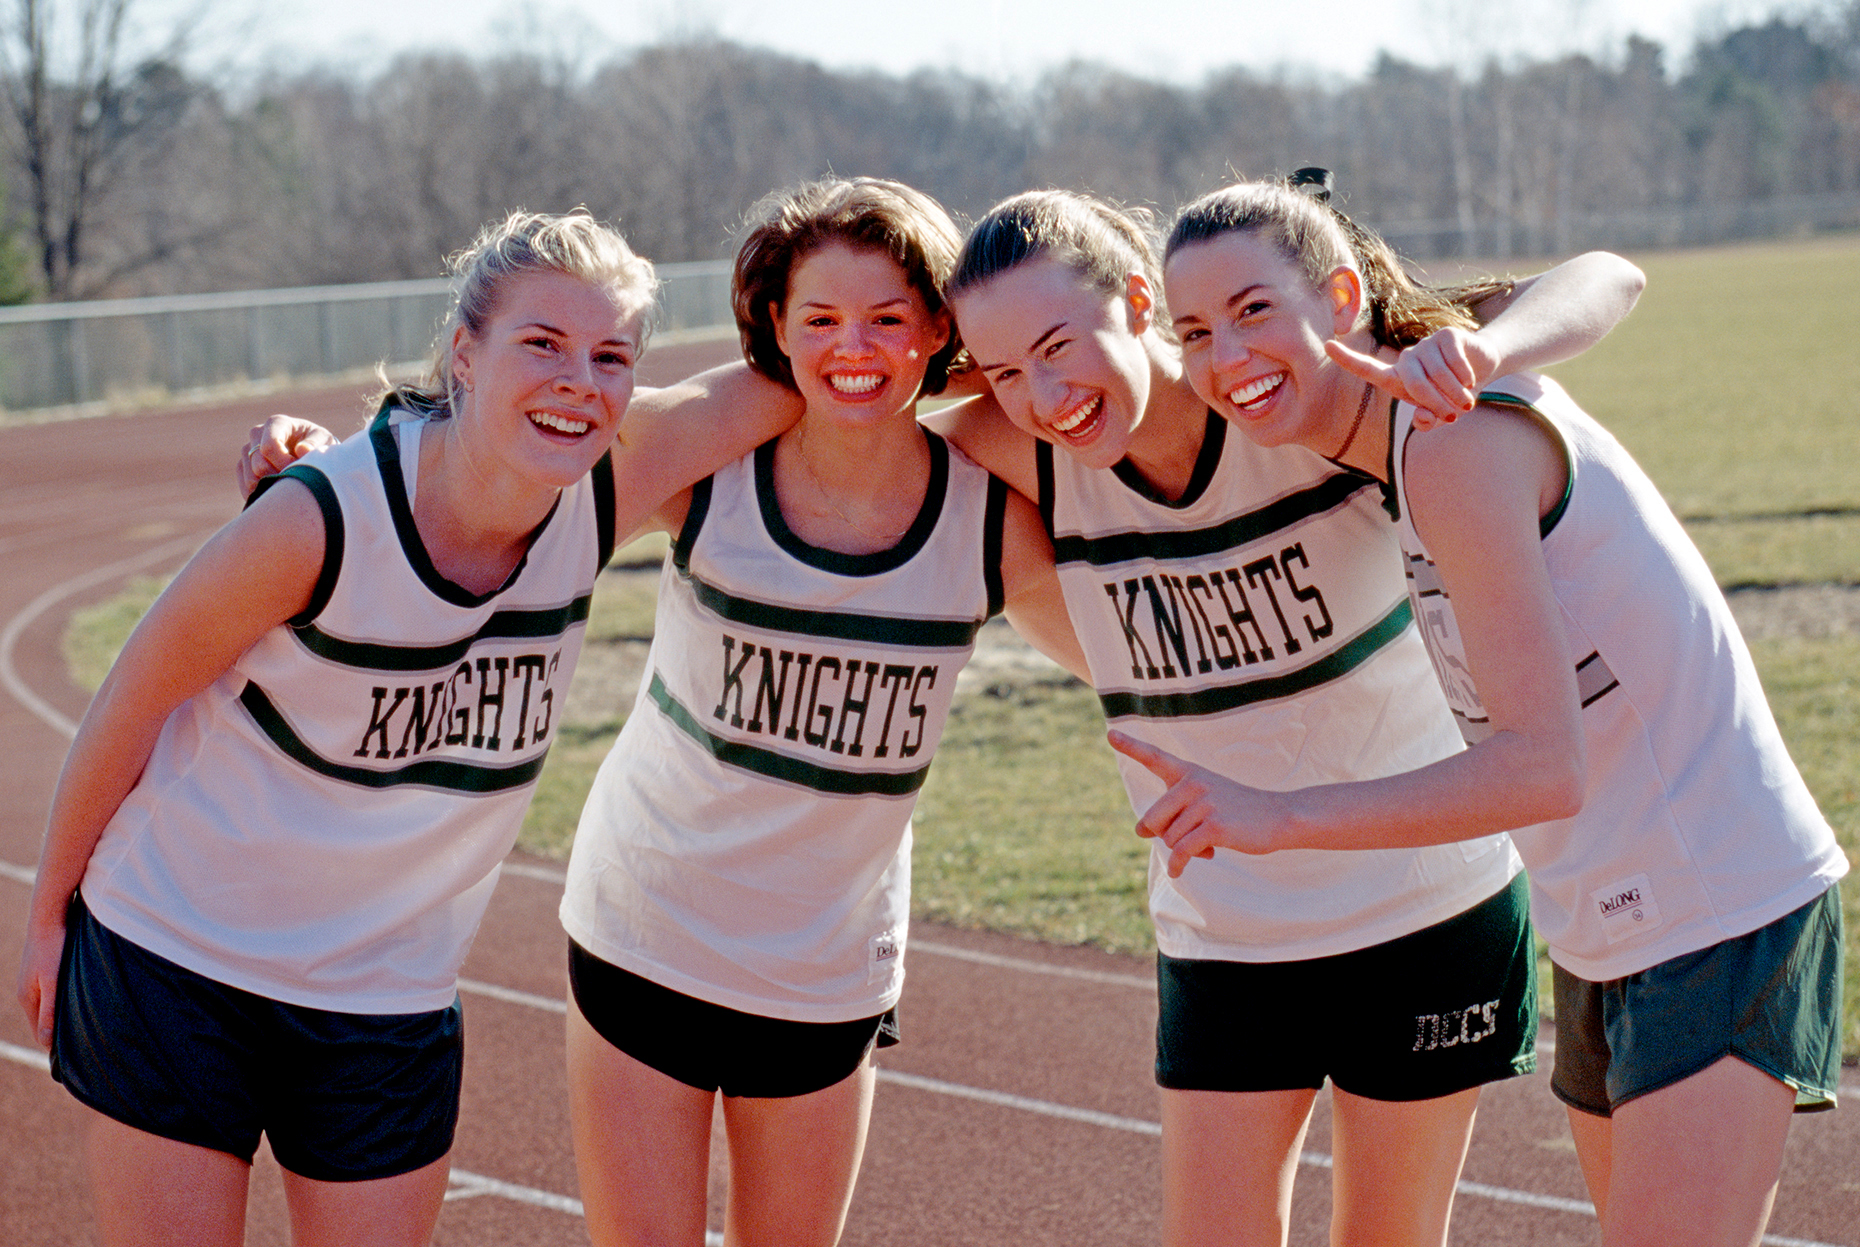 Teenage girls on a high school track team celebrate victory